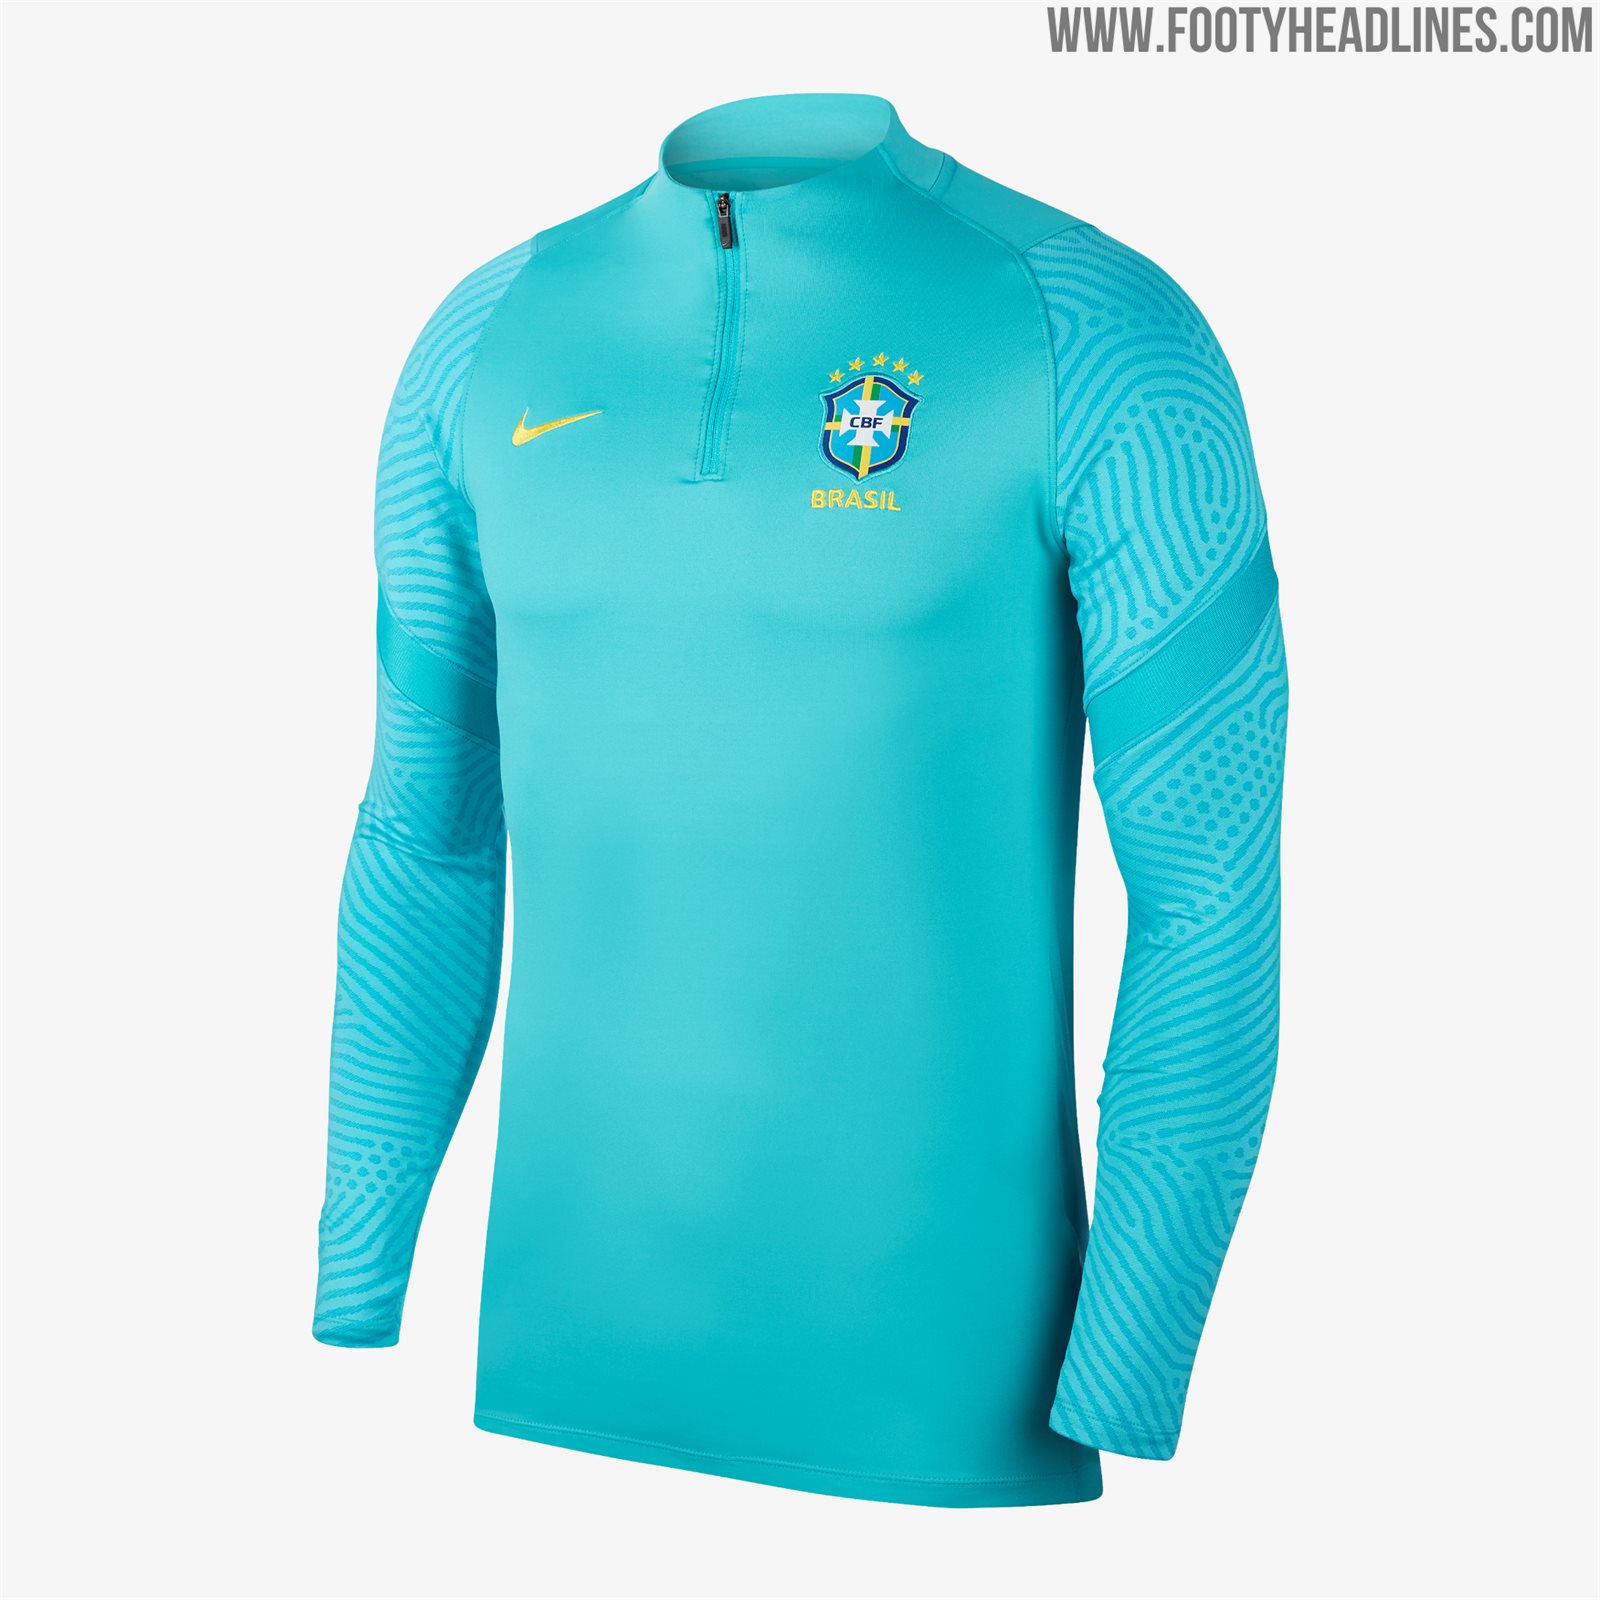 All Nike 2020-21 Training Kits: Brazil, England, France, Portugal ...